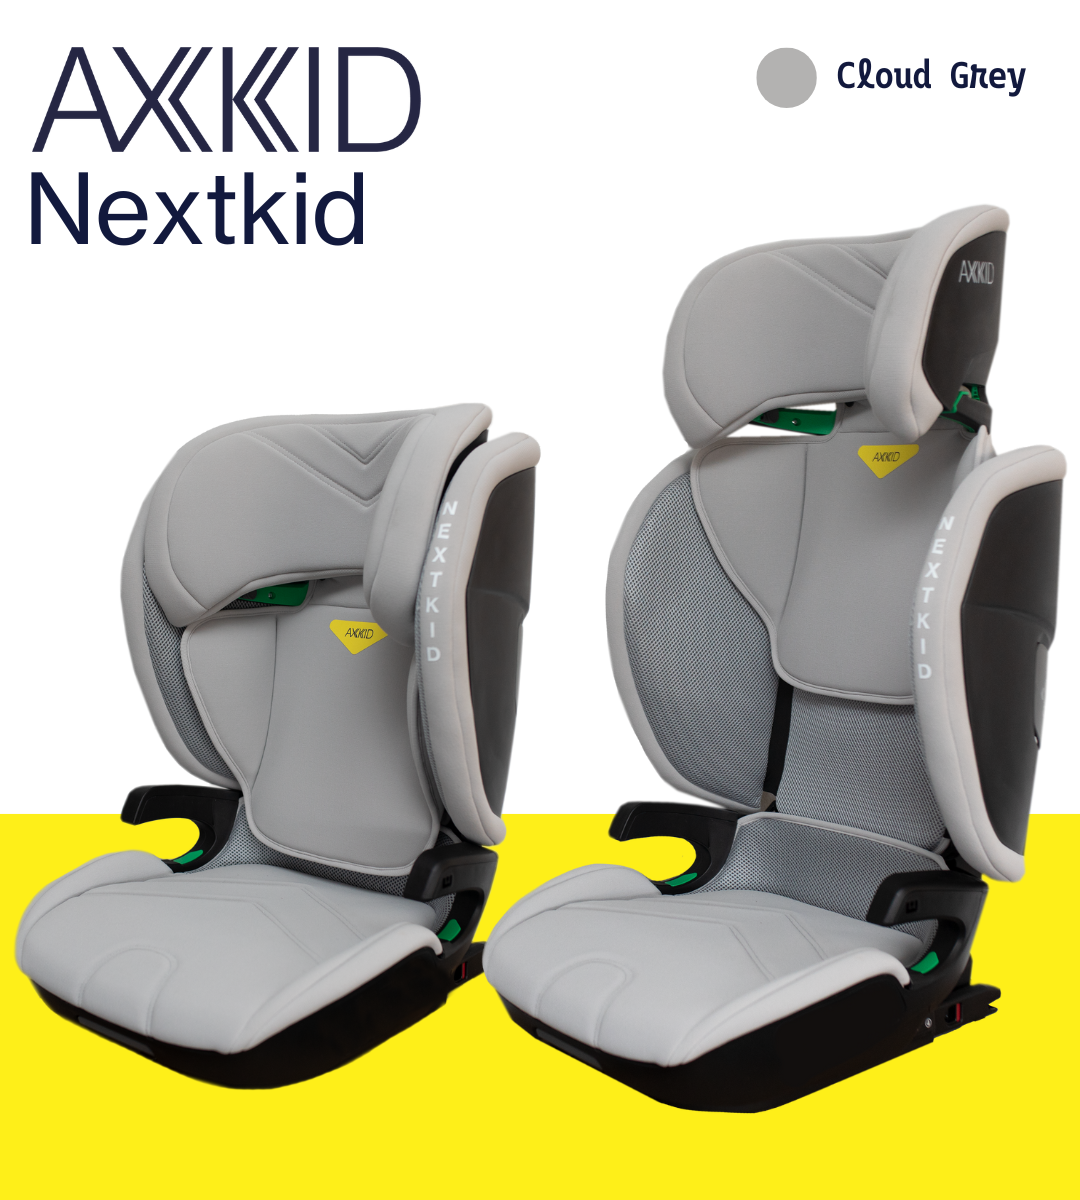 Axkid Nextkid - Axkid UK